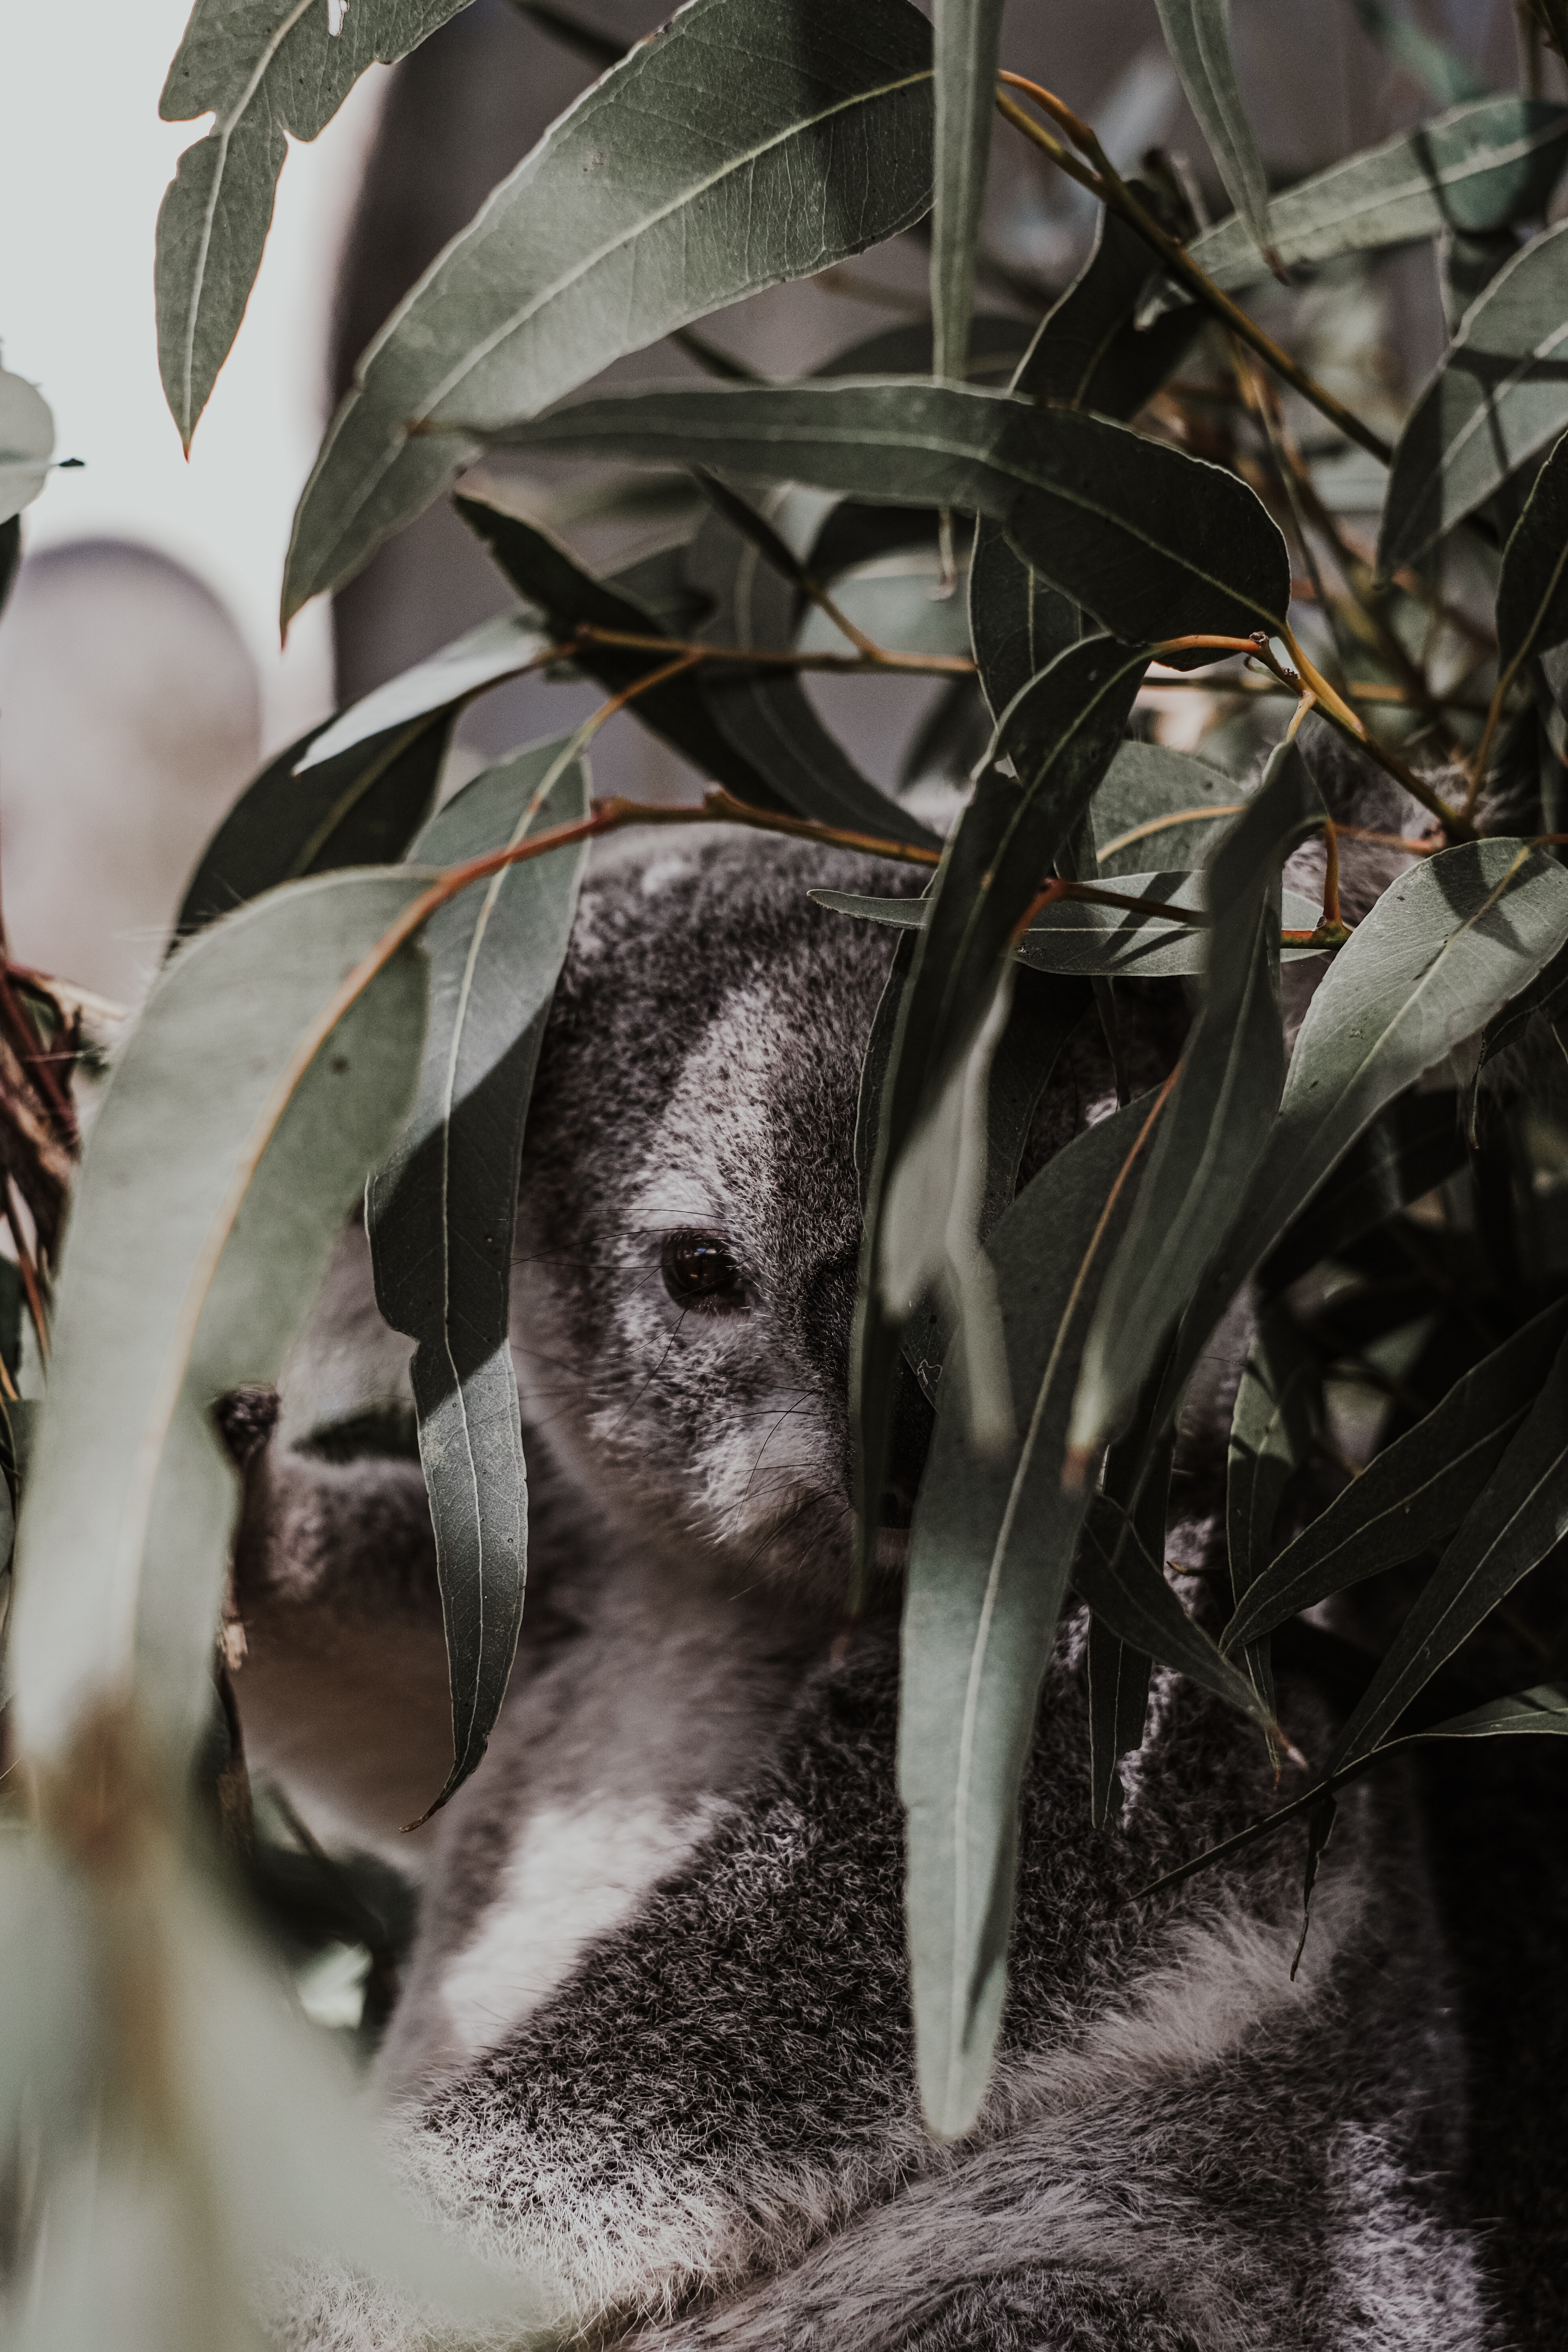 125057 descargar imagen animales, hojas, gris, sucursales, ramas, animal, coala, koala: fondos de pantalla y protectores de pantalla gratis